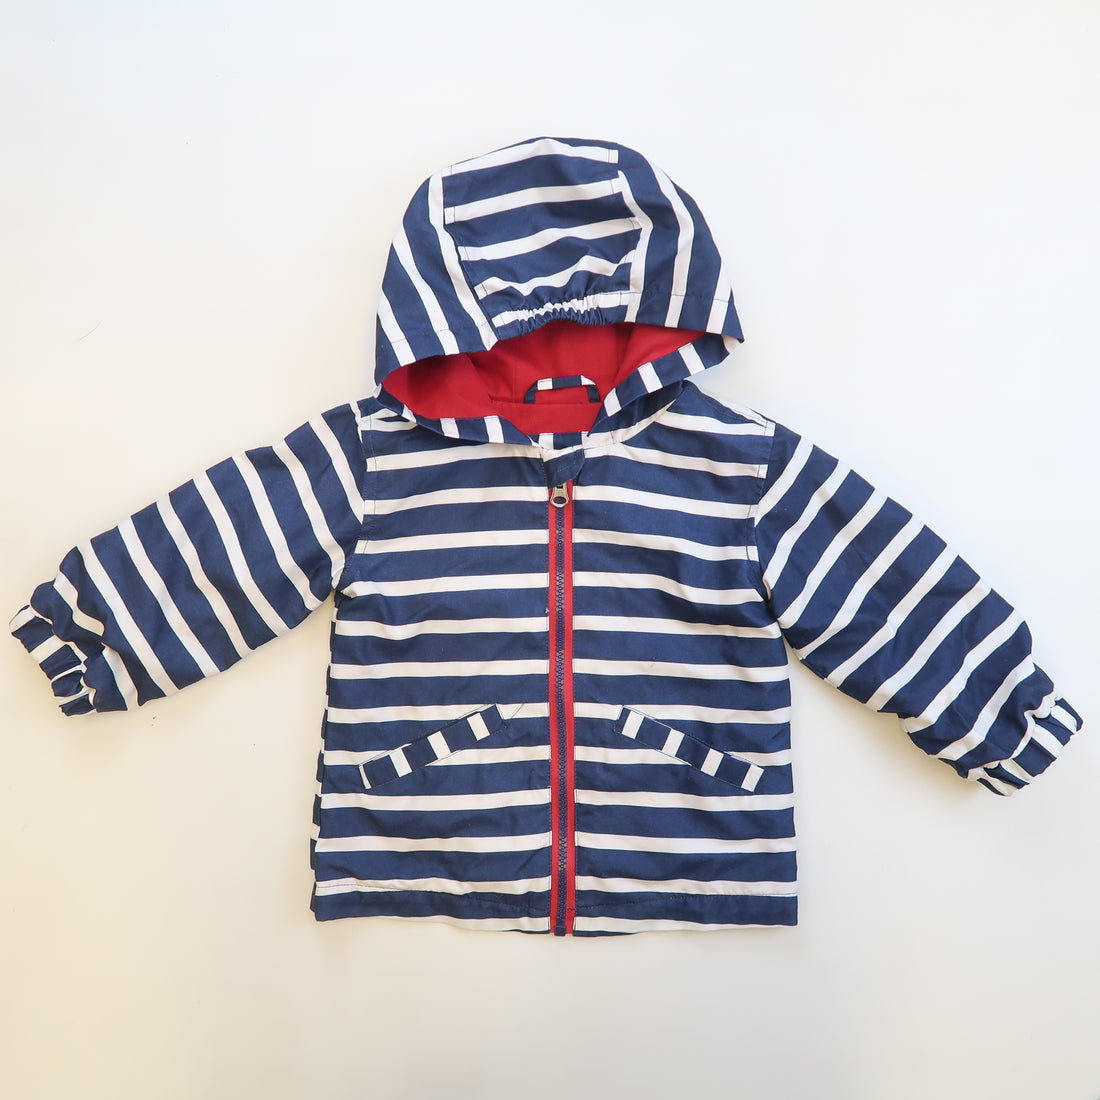 NorthPeak Baby - Jacket (18M)